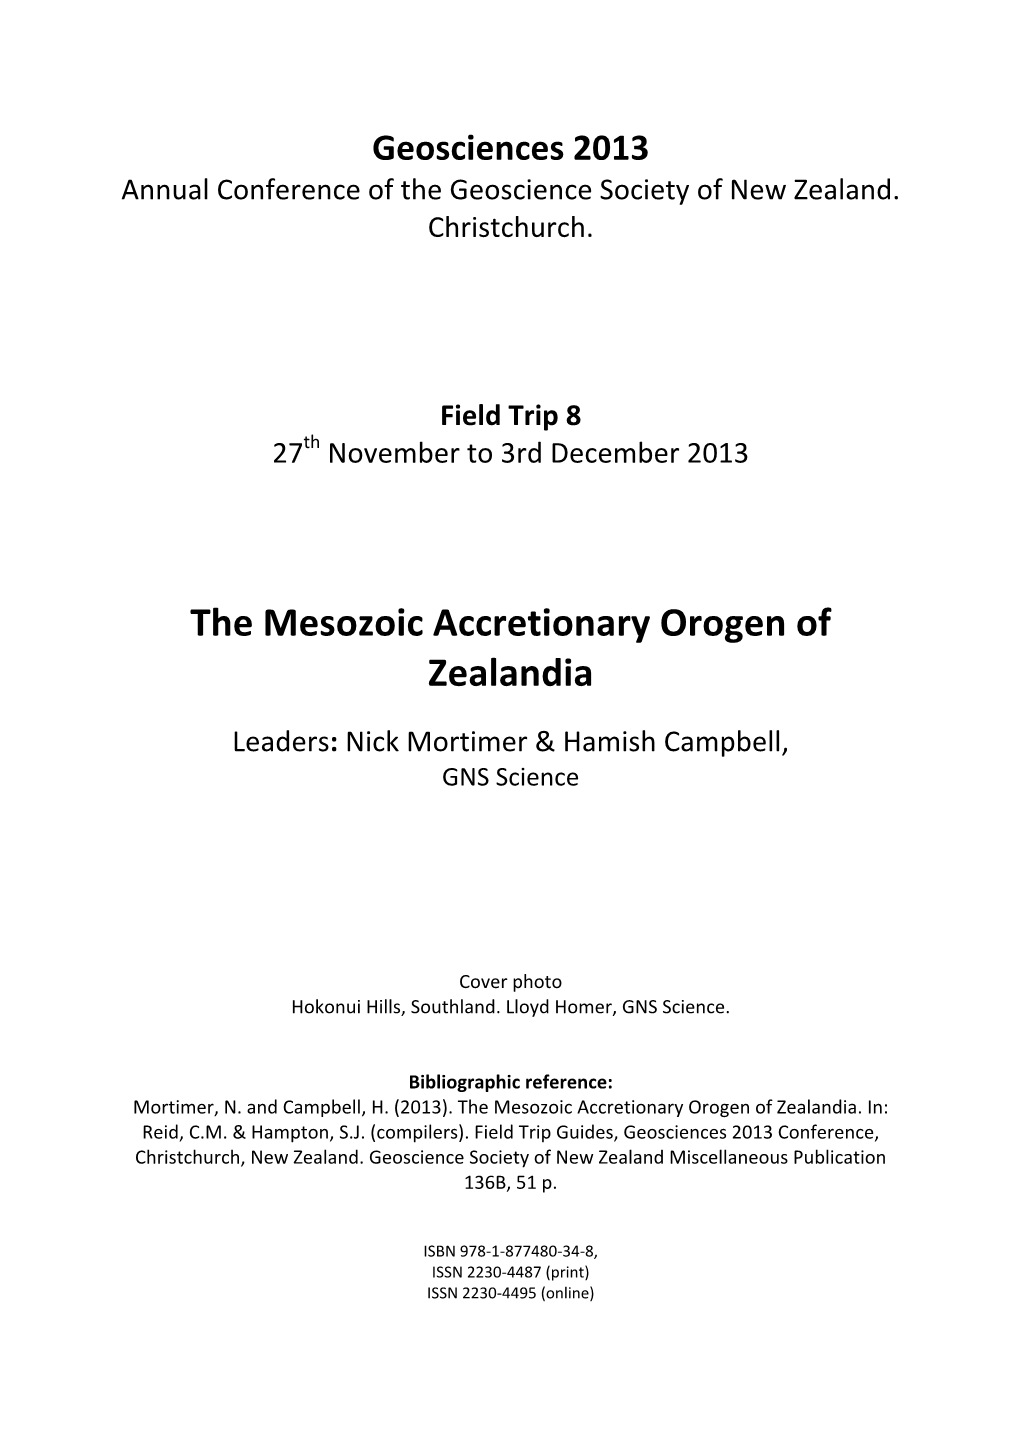 The Mesozoic Accretionary Orogen of Zealandia